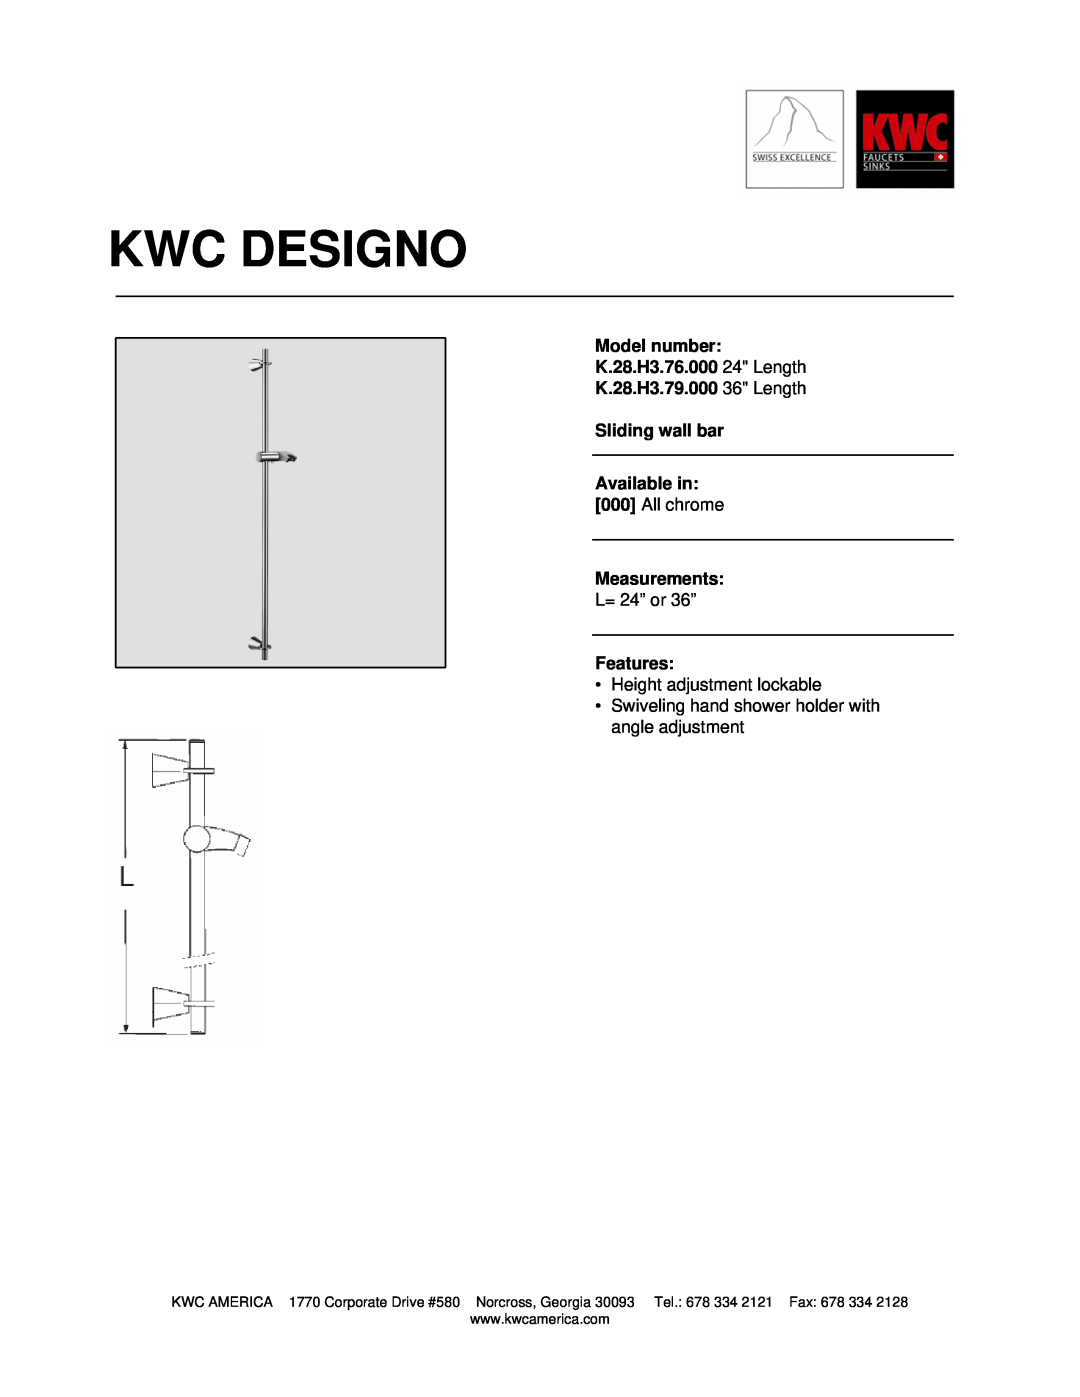 KWC manual Kwc Designo, Model number K.28.H3.76.000 24 Length, K.28.H3.79.000 36 Length Sliding wall bar, L= 24” or 36” 